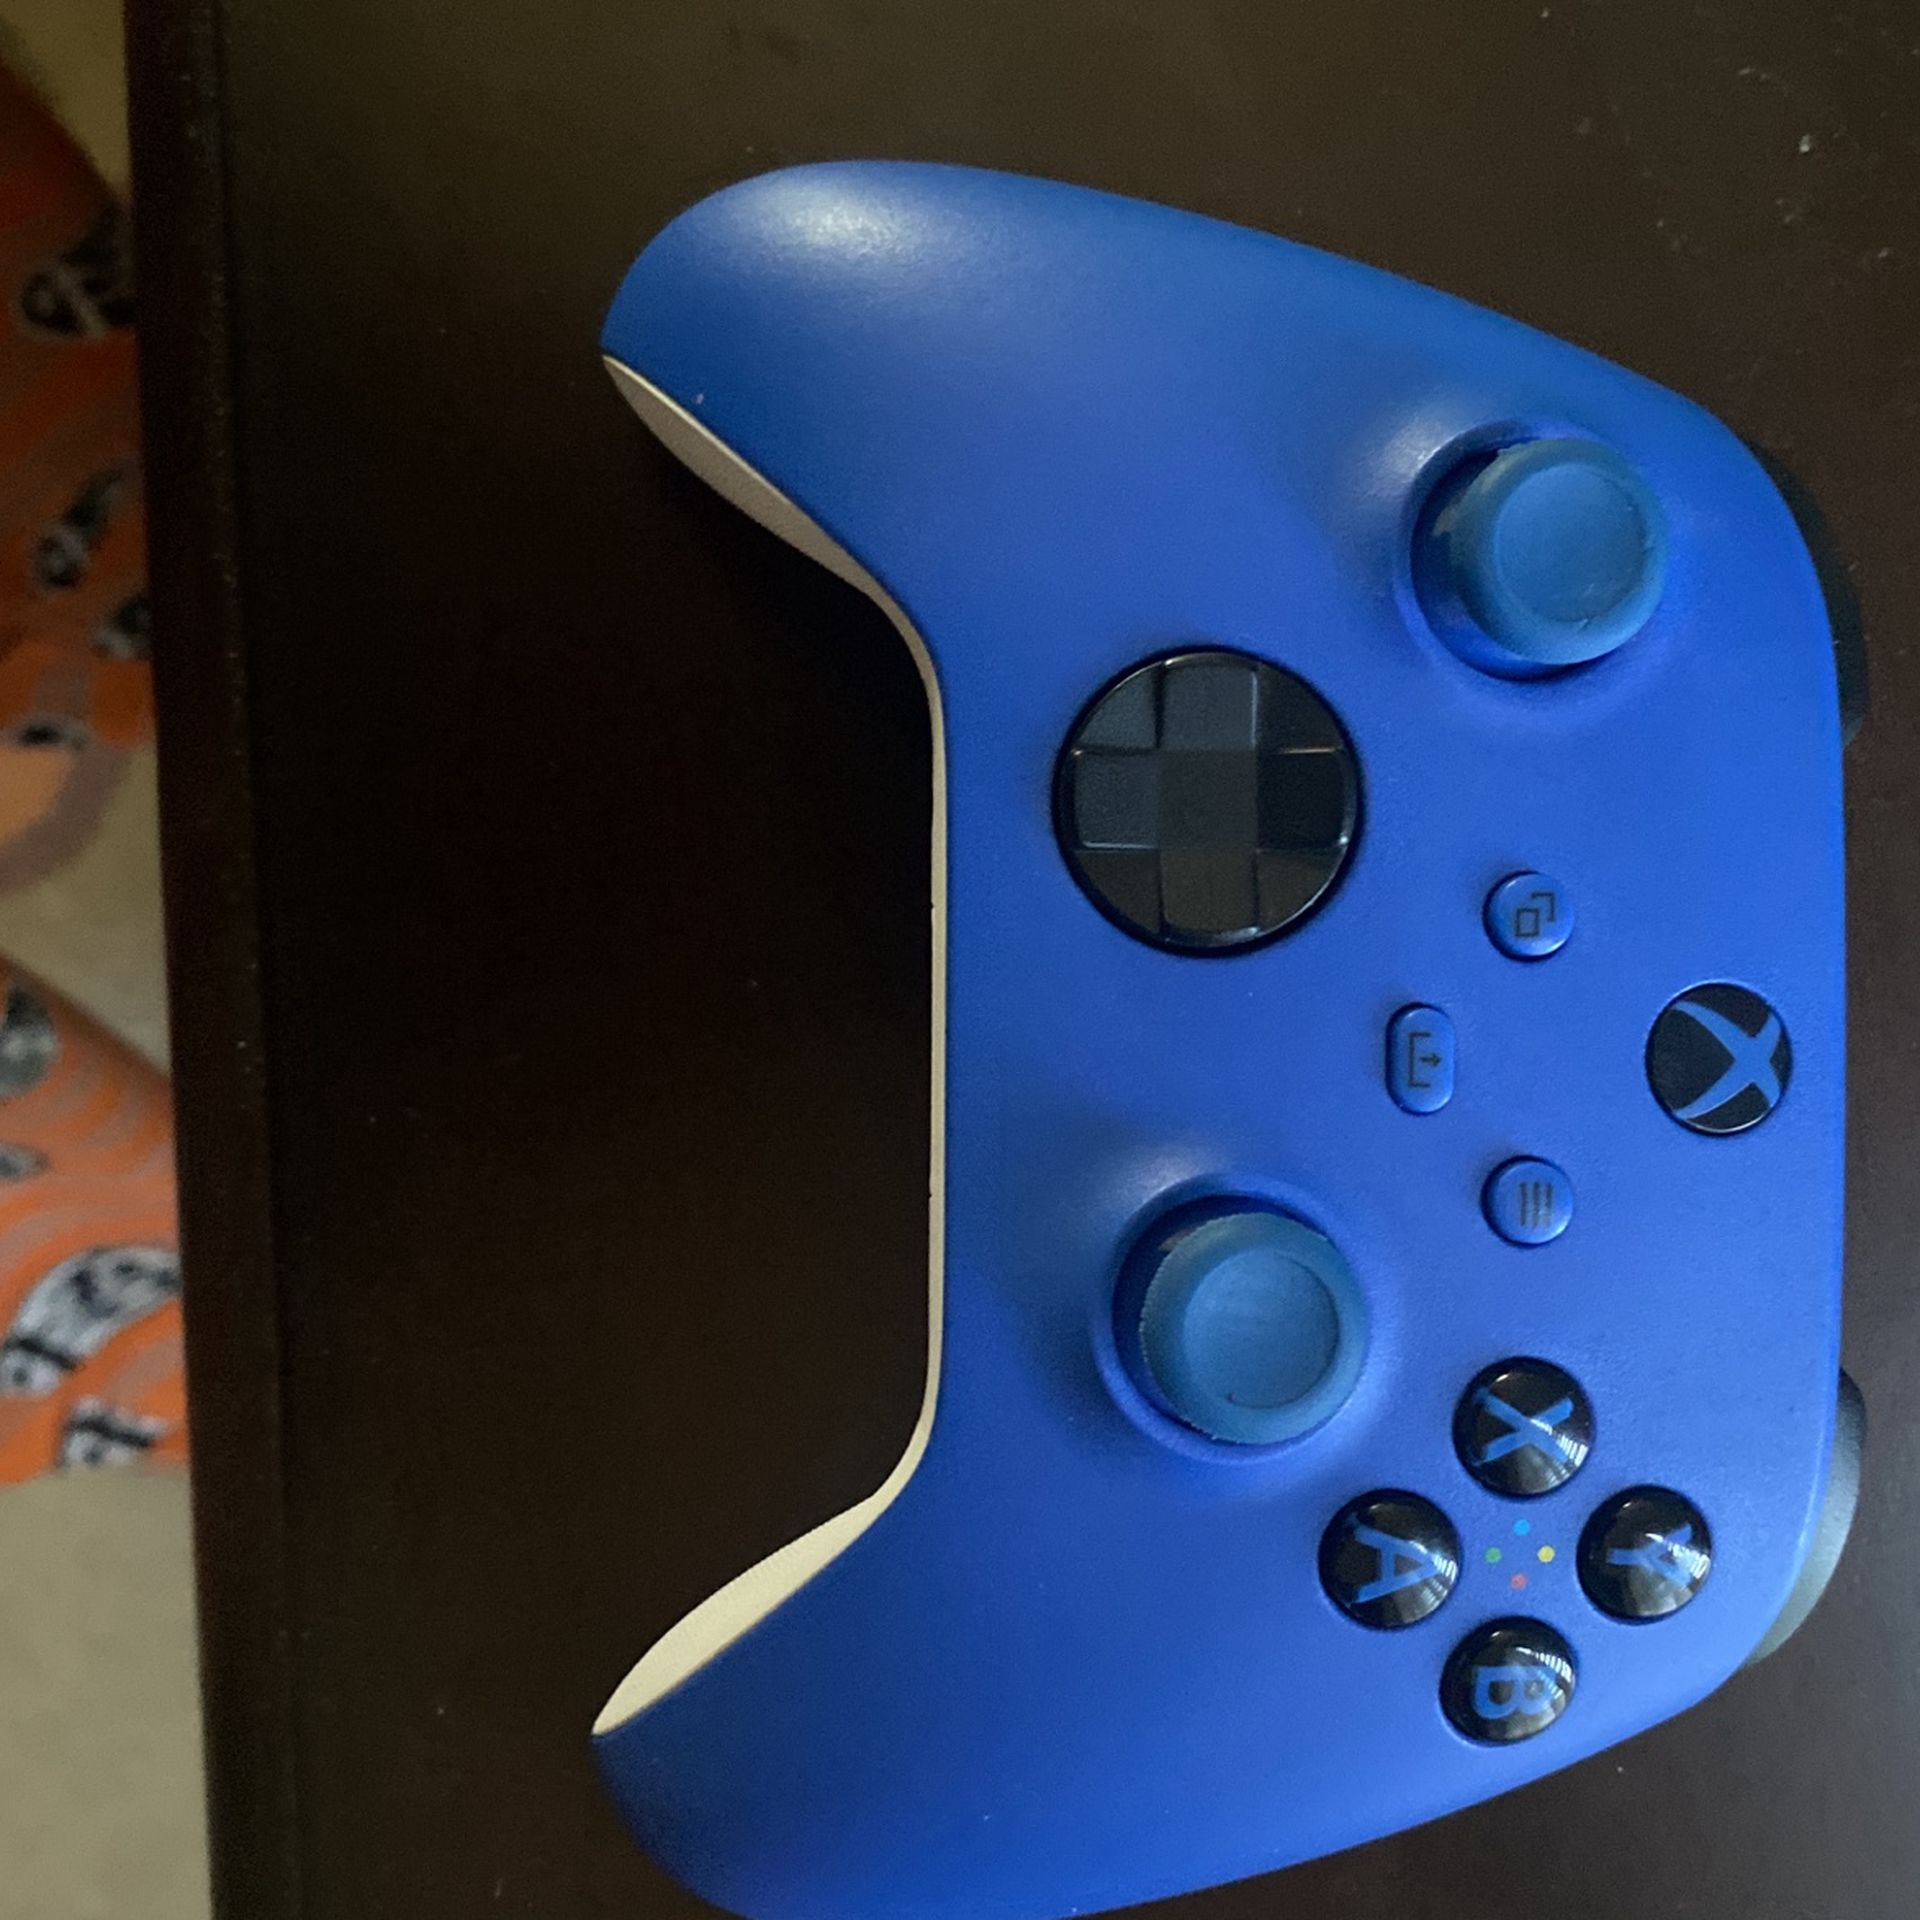 Xbox series X/S blue controller